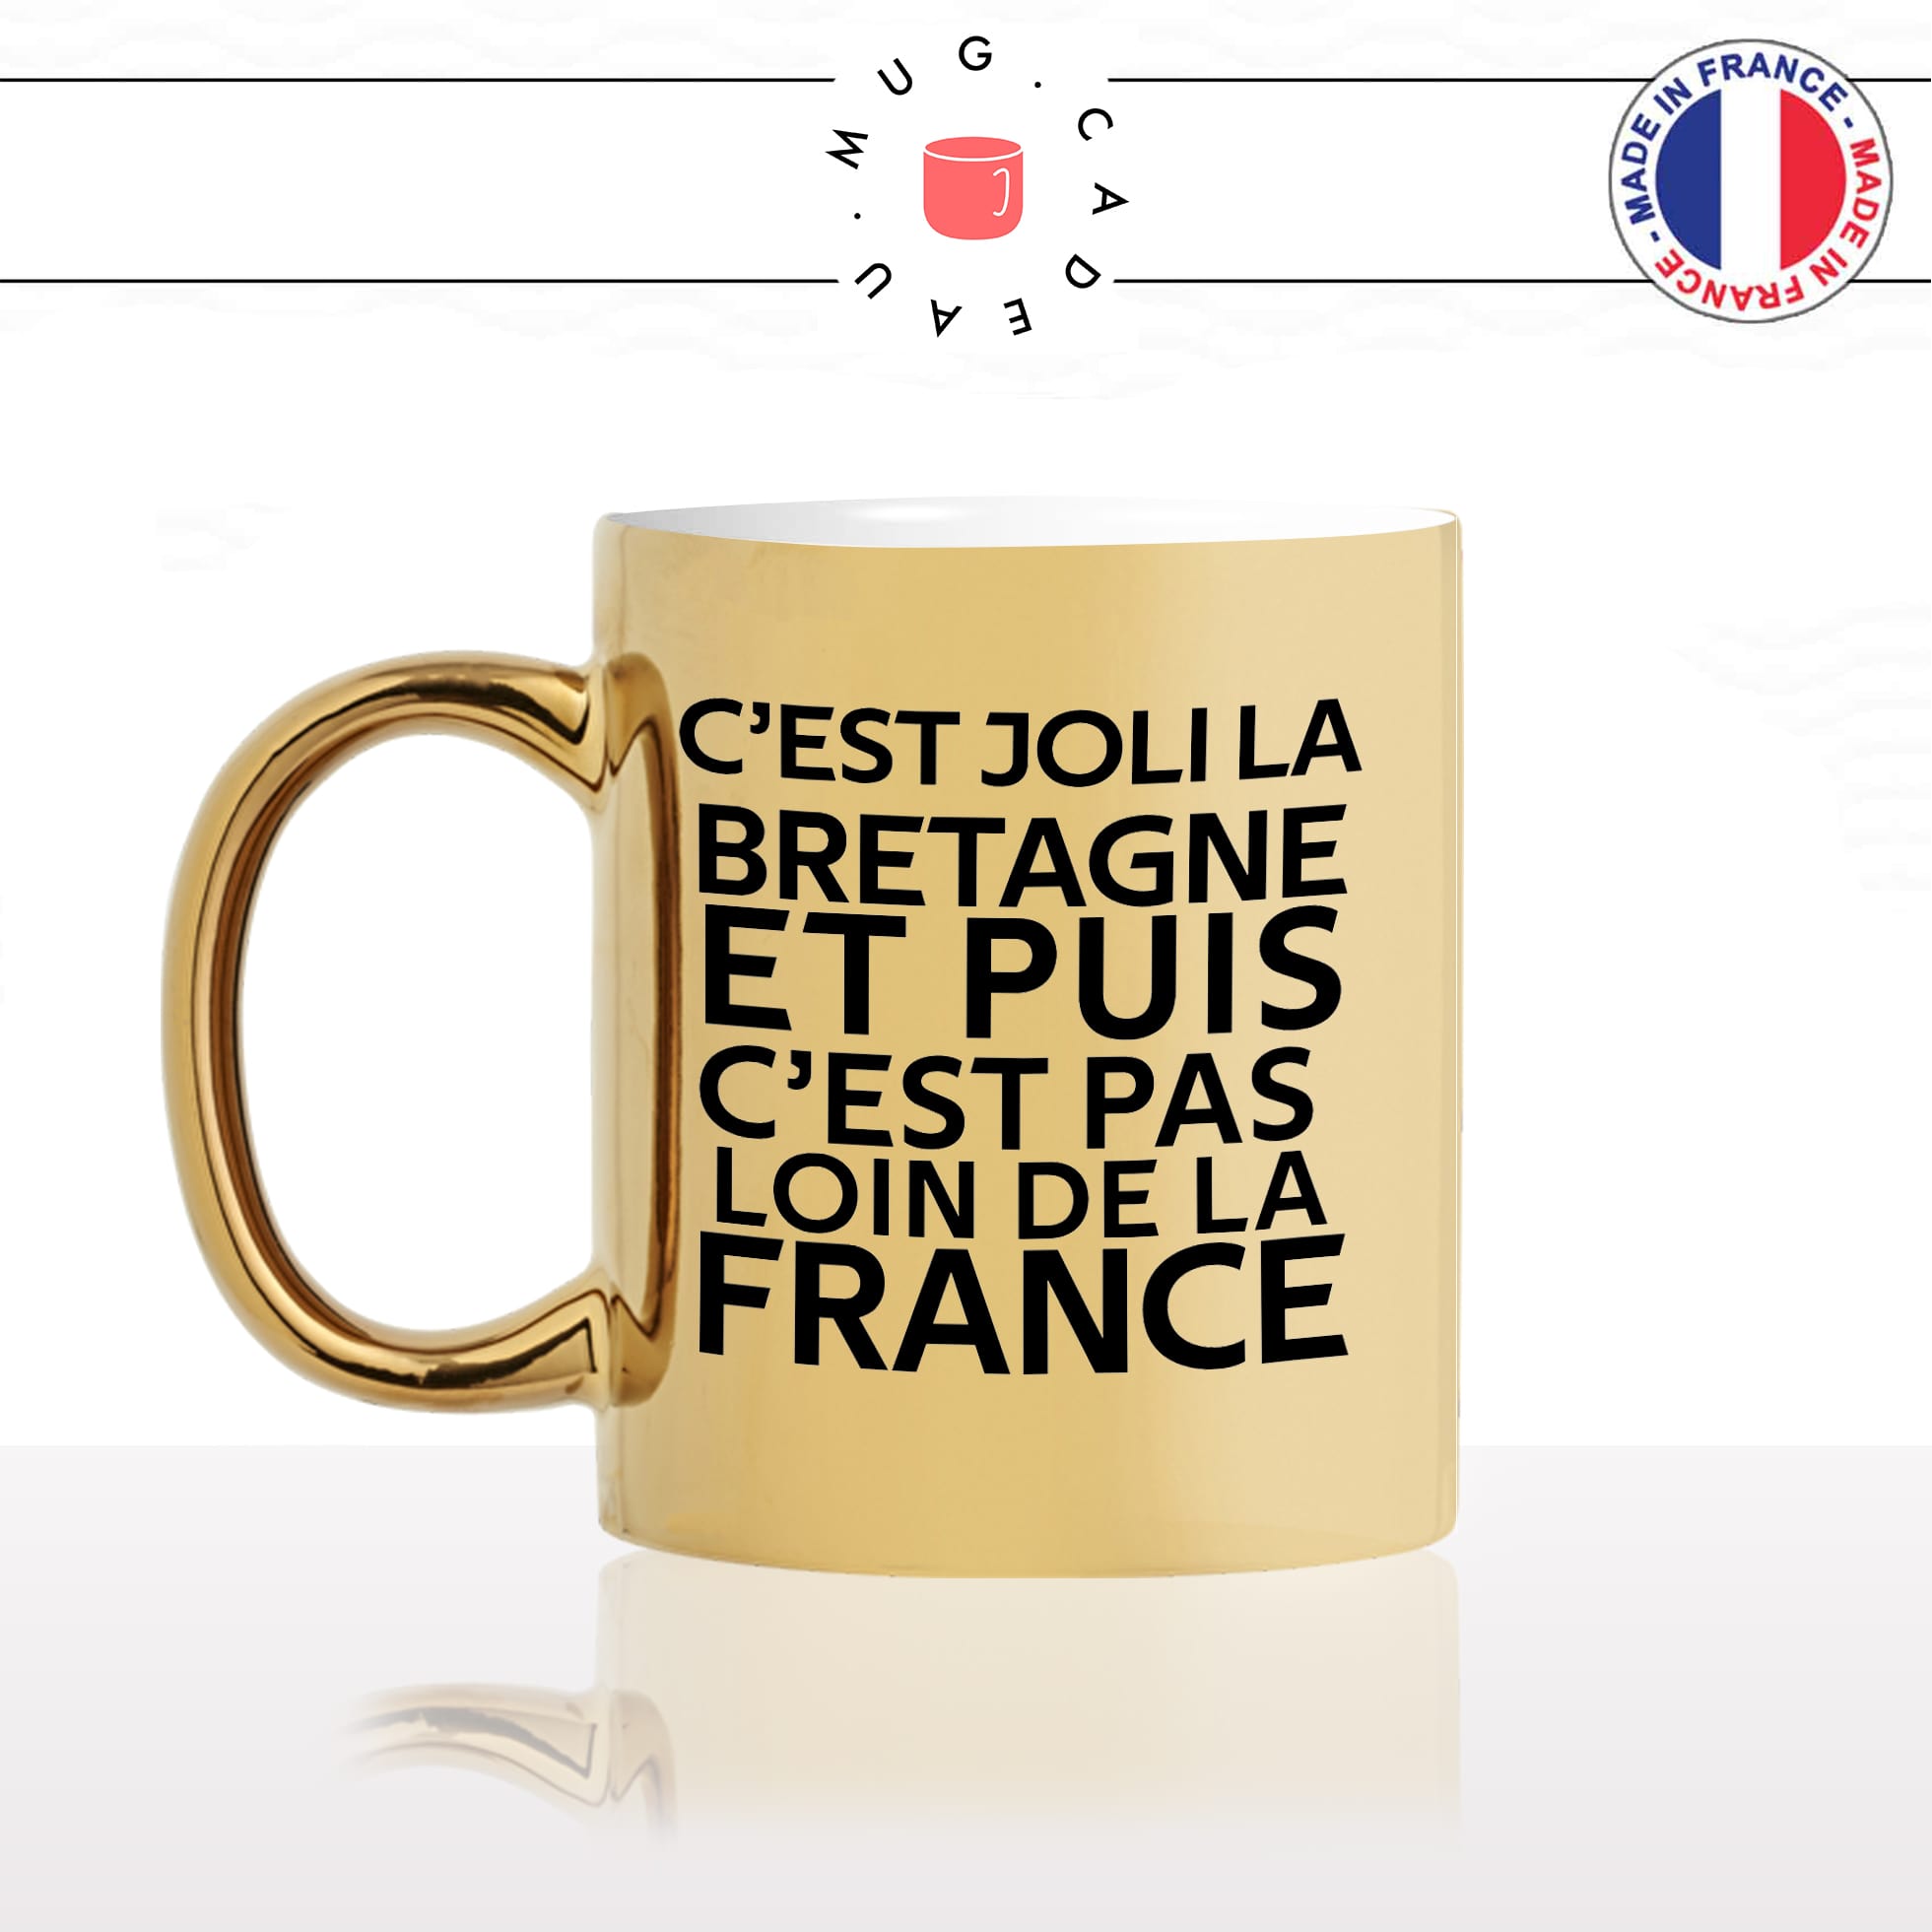 mug-tasse-or-doré-gold-citation-phrase-culte-coluche-cest-joli-la-bretagne-france-breton-humour-fun-idée-cadeau-originale-cool-min